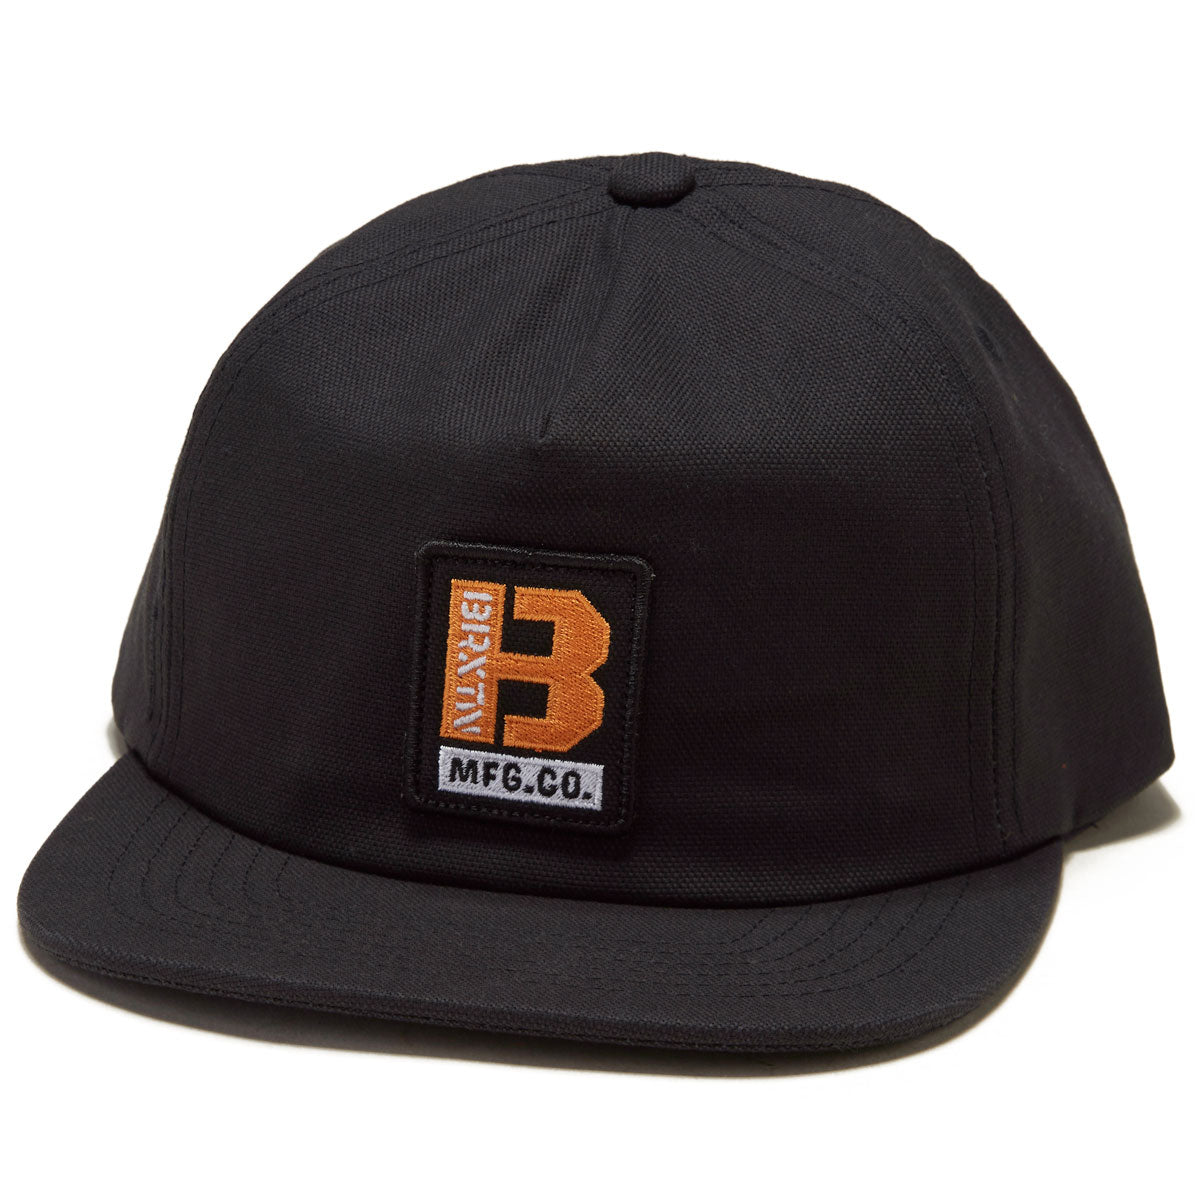 Brixton Builders Mp Adjustable Hat - Black image 1